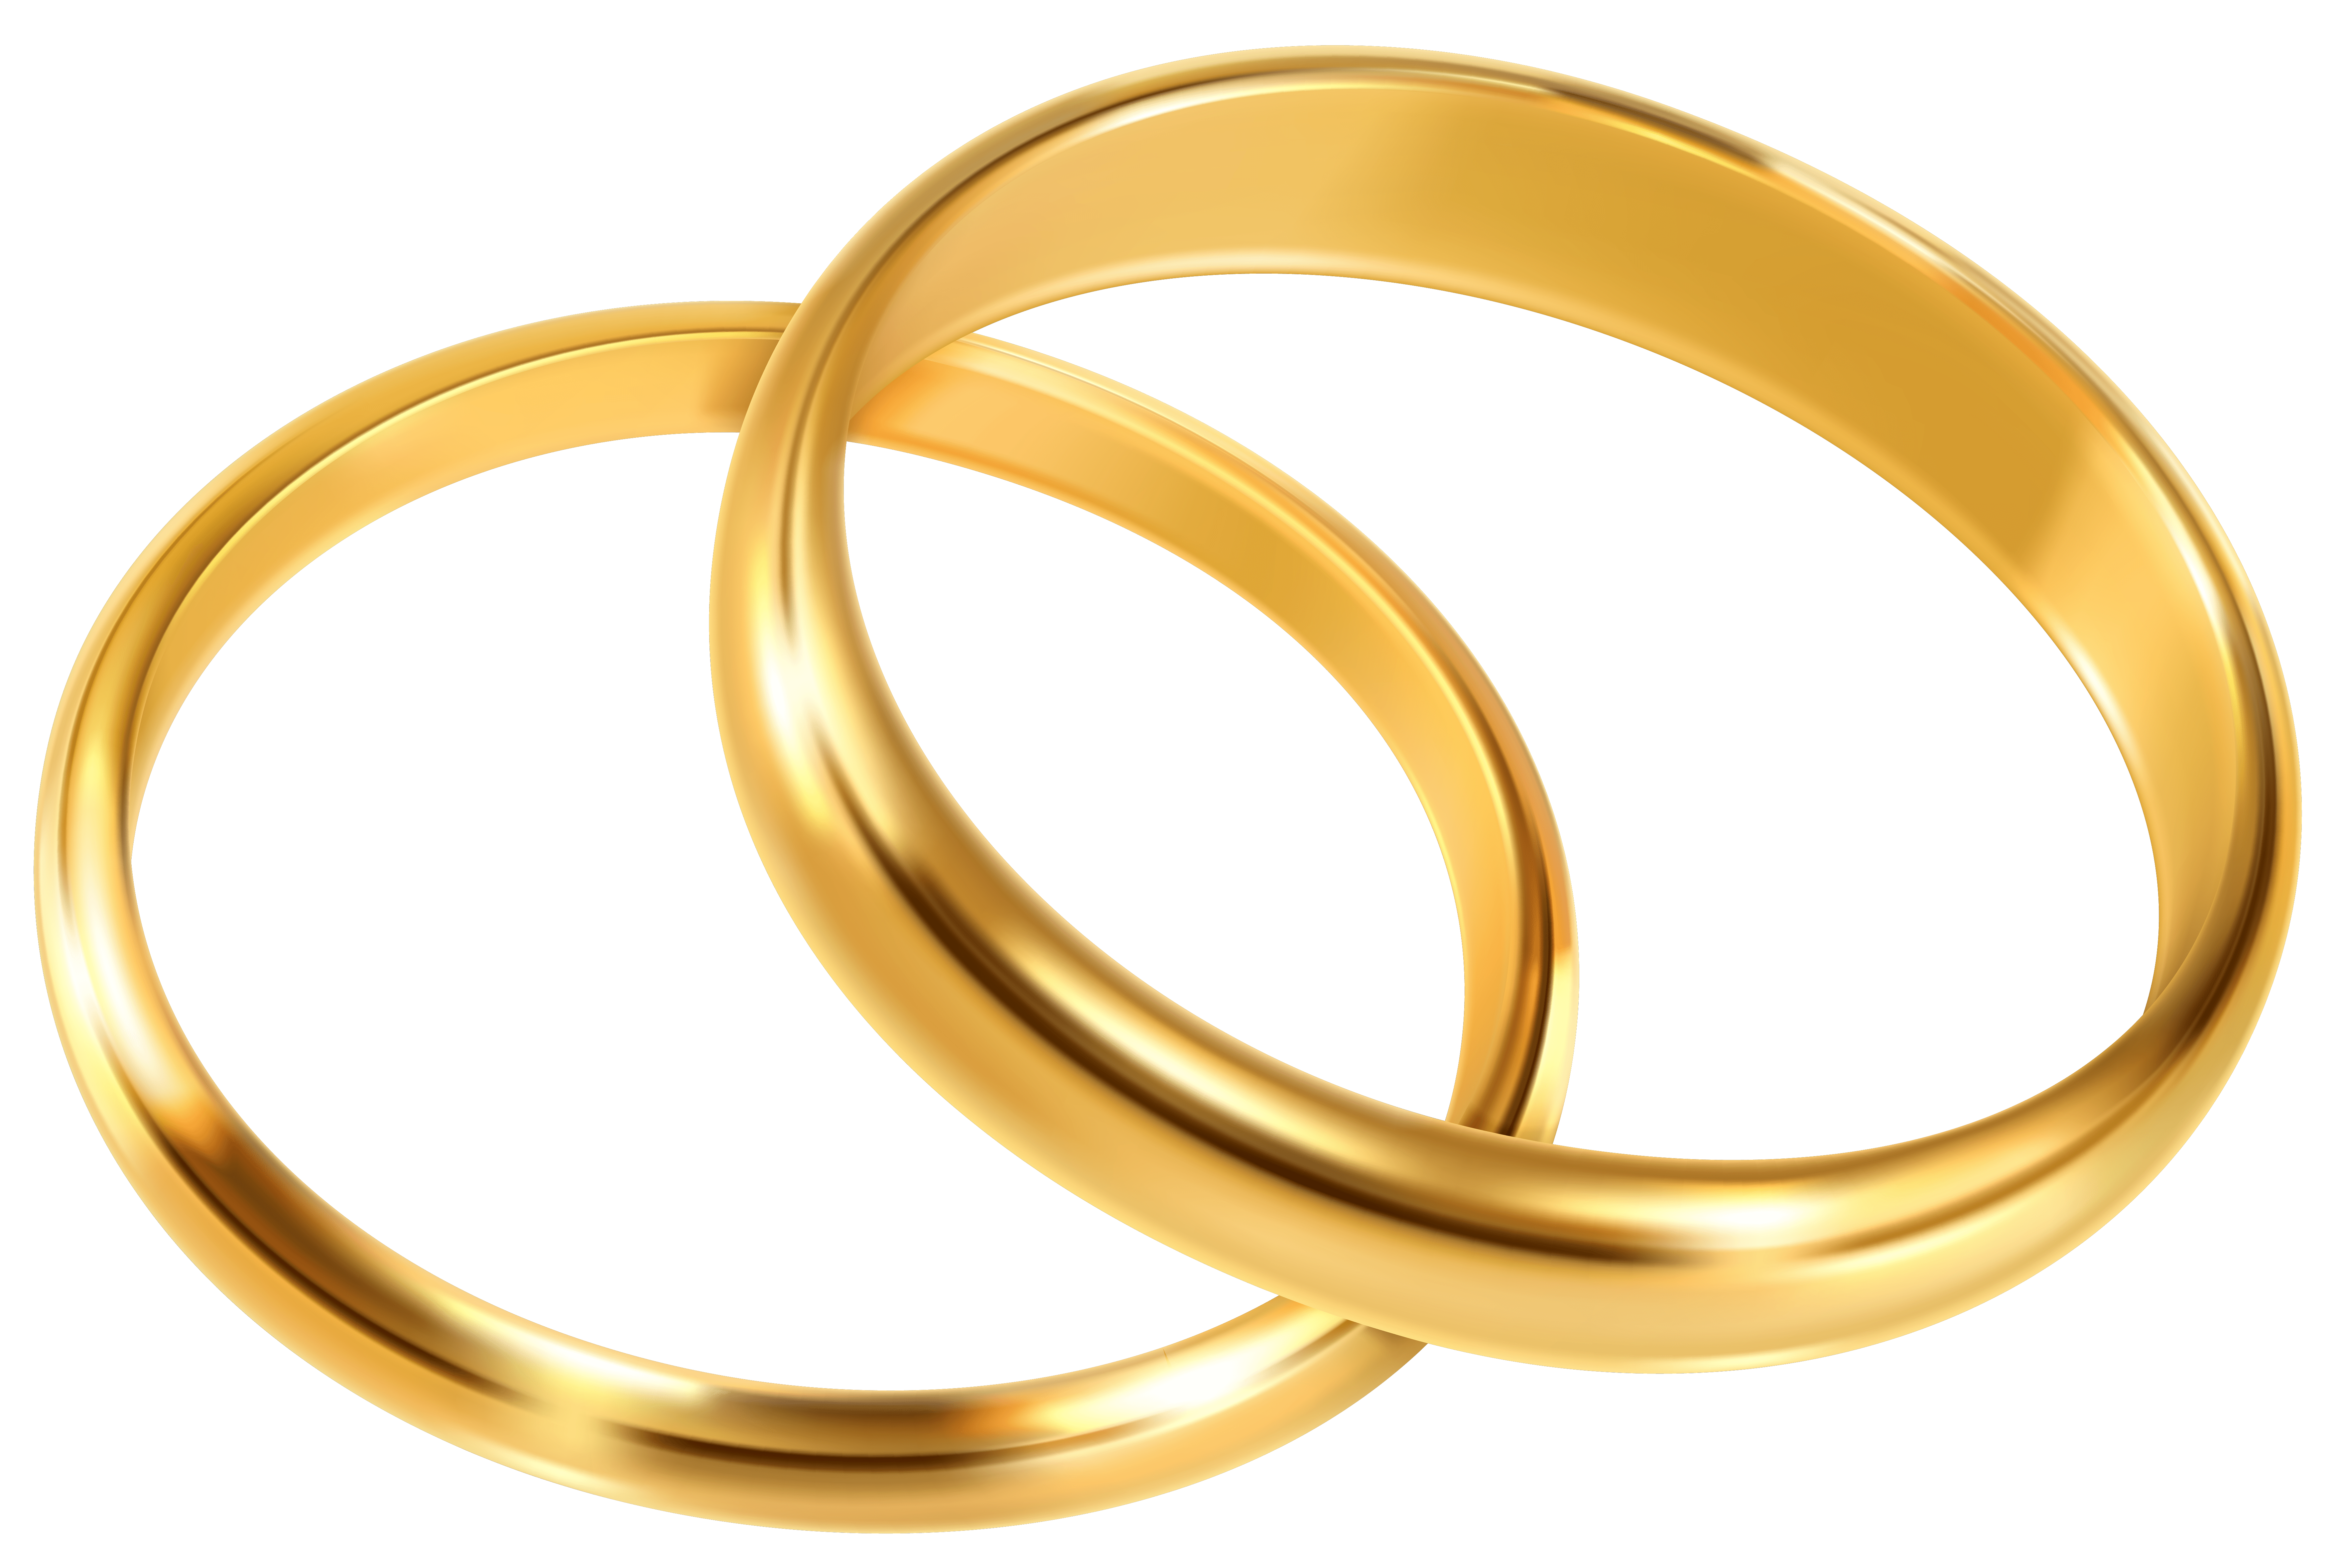 Wedding ring clip art gold wedding ring clipart.